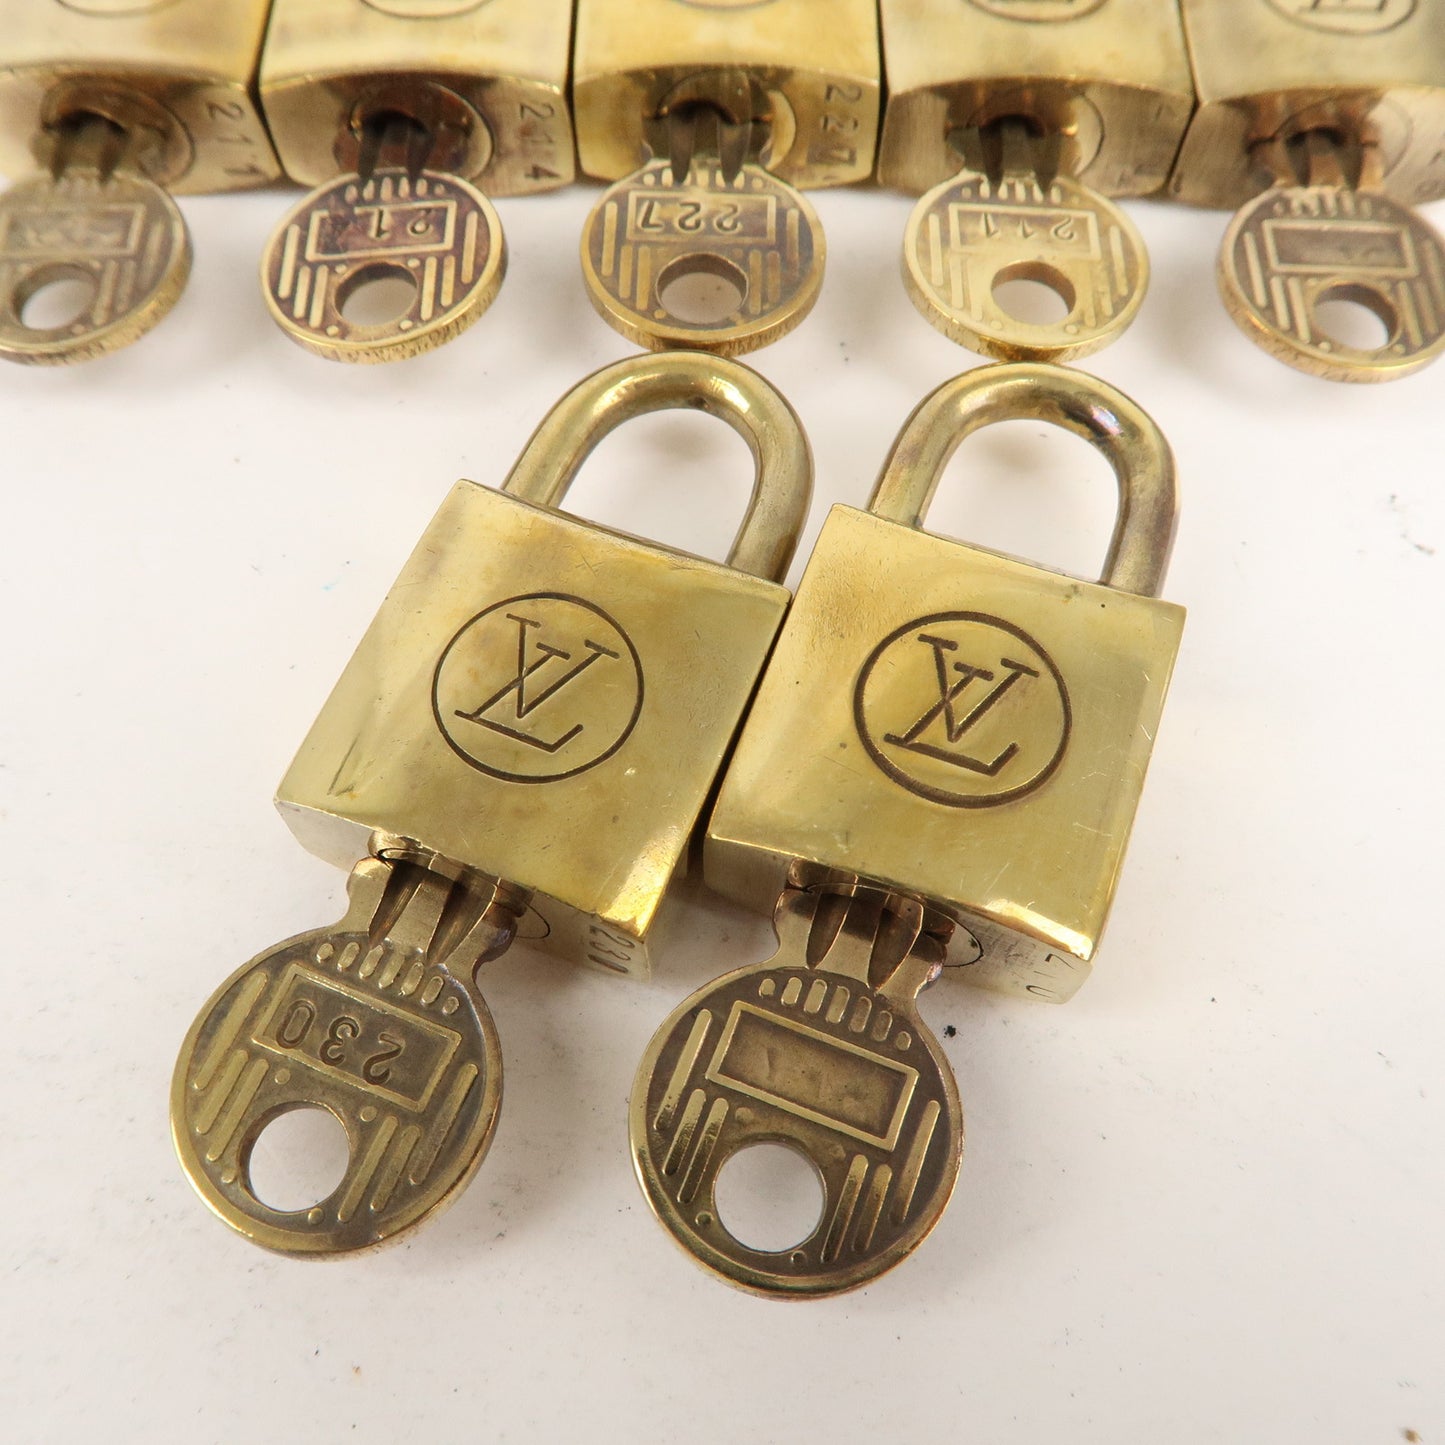 Louis Vuitton Set of 10 Lock & Key Cadena Key Lock Old Style